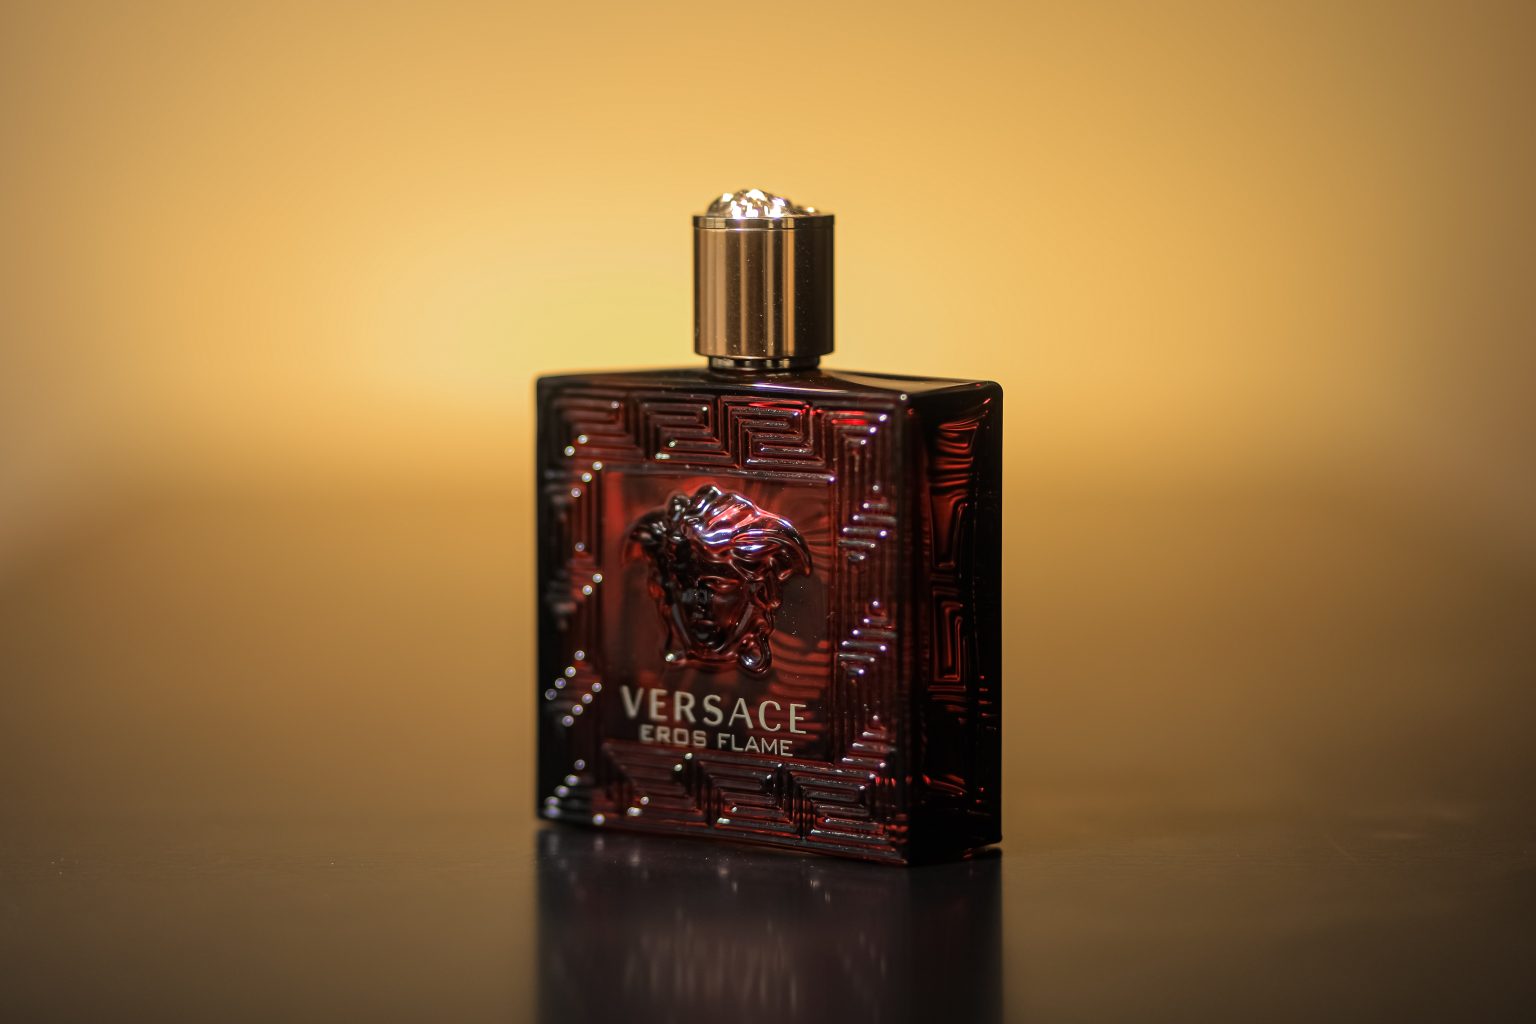 https://img.fragrancex.com/images/blog/pexels-gift-habeshaw-8516275-1536x1024.jpg